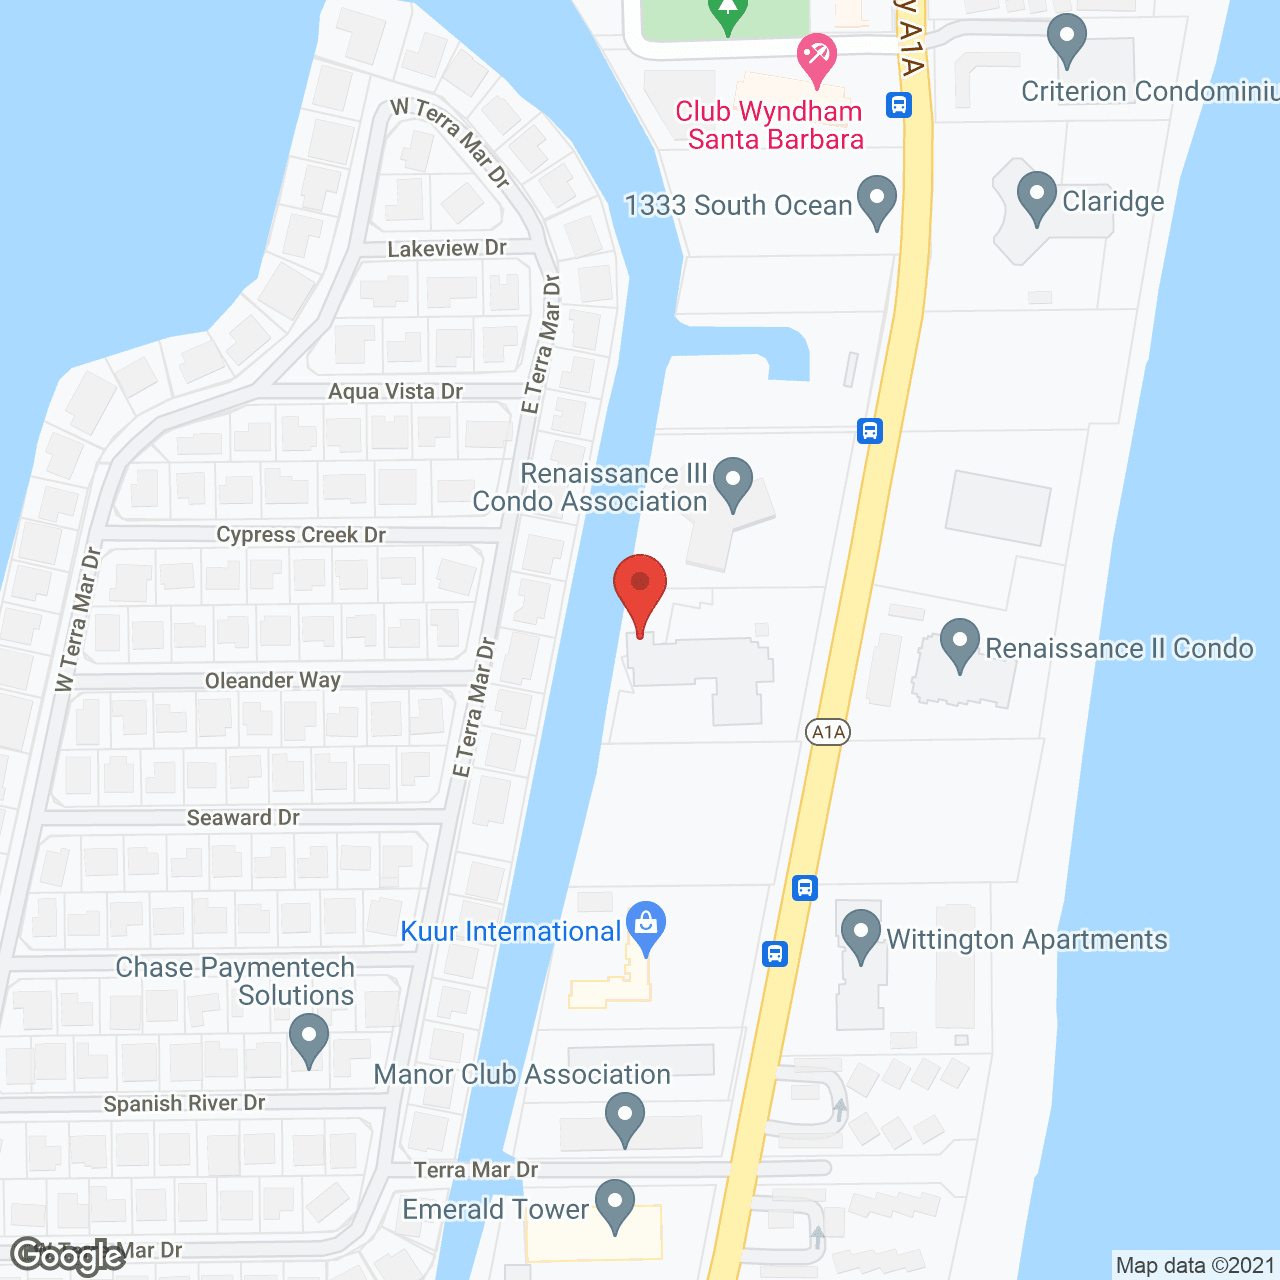 Five Star Premier Residences of Pompano Beach in google map